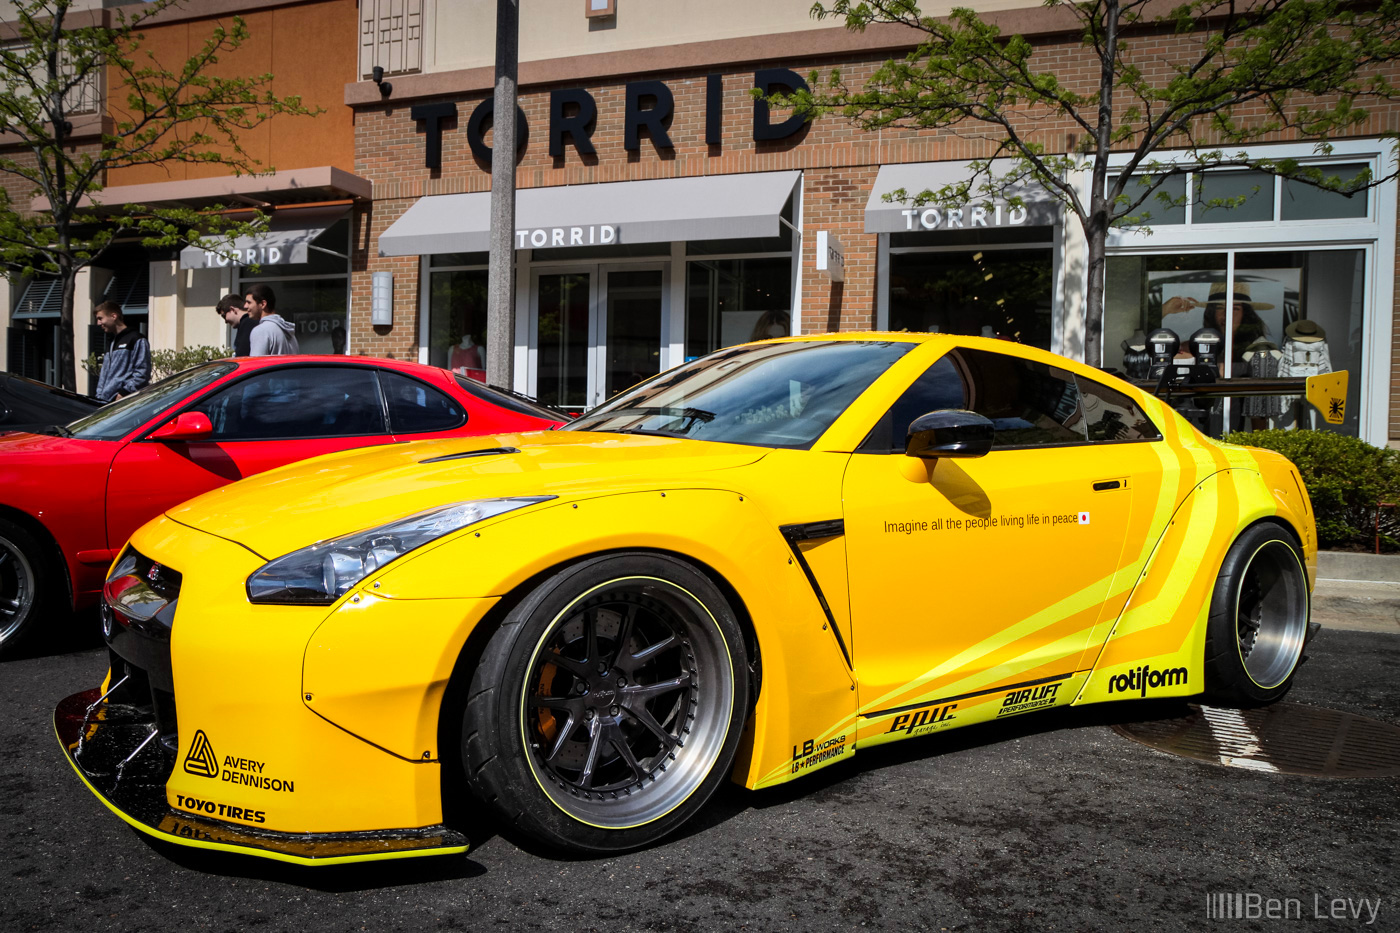 Yellow Libertywalk Nissan GT-R at Chicago Car Meet